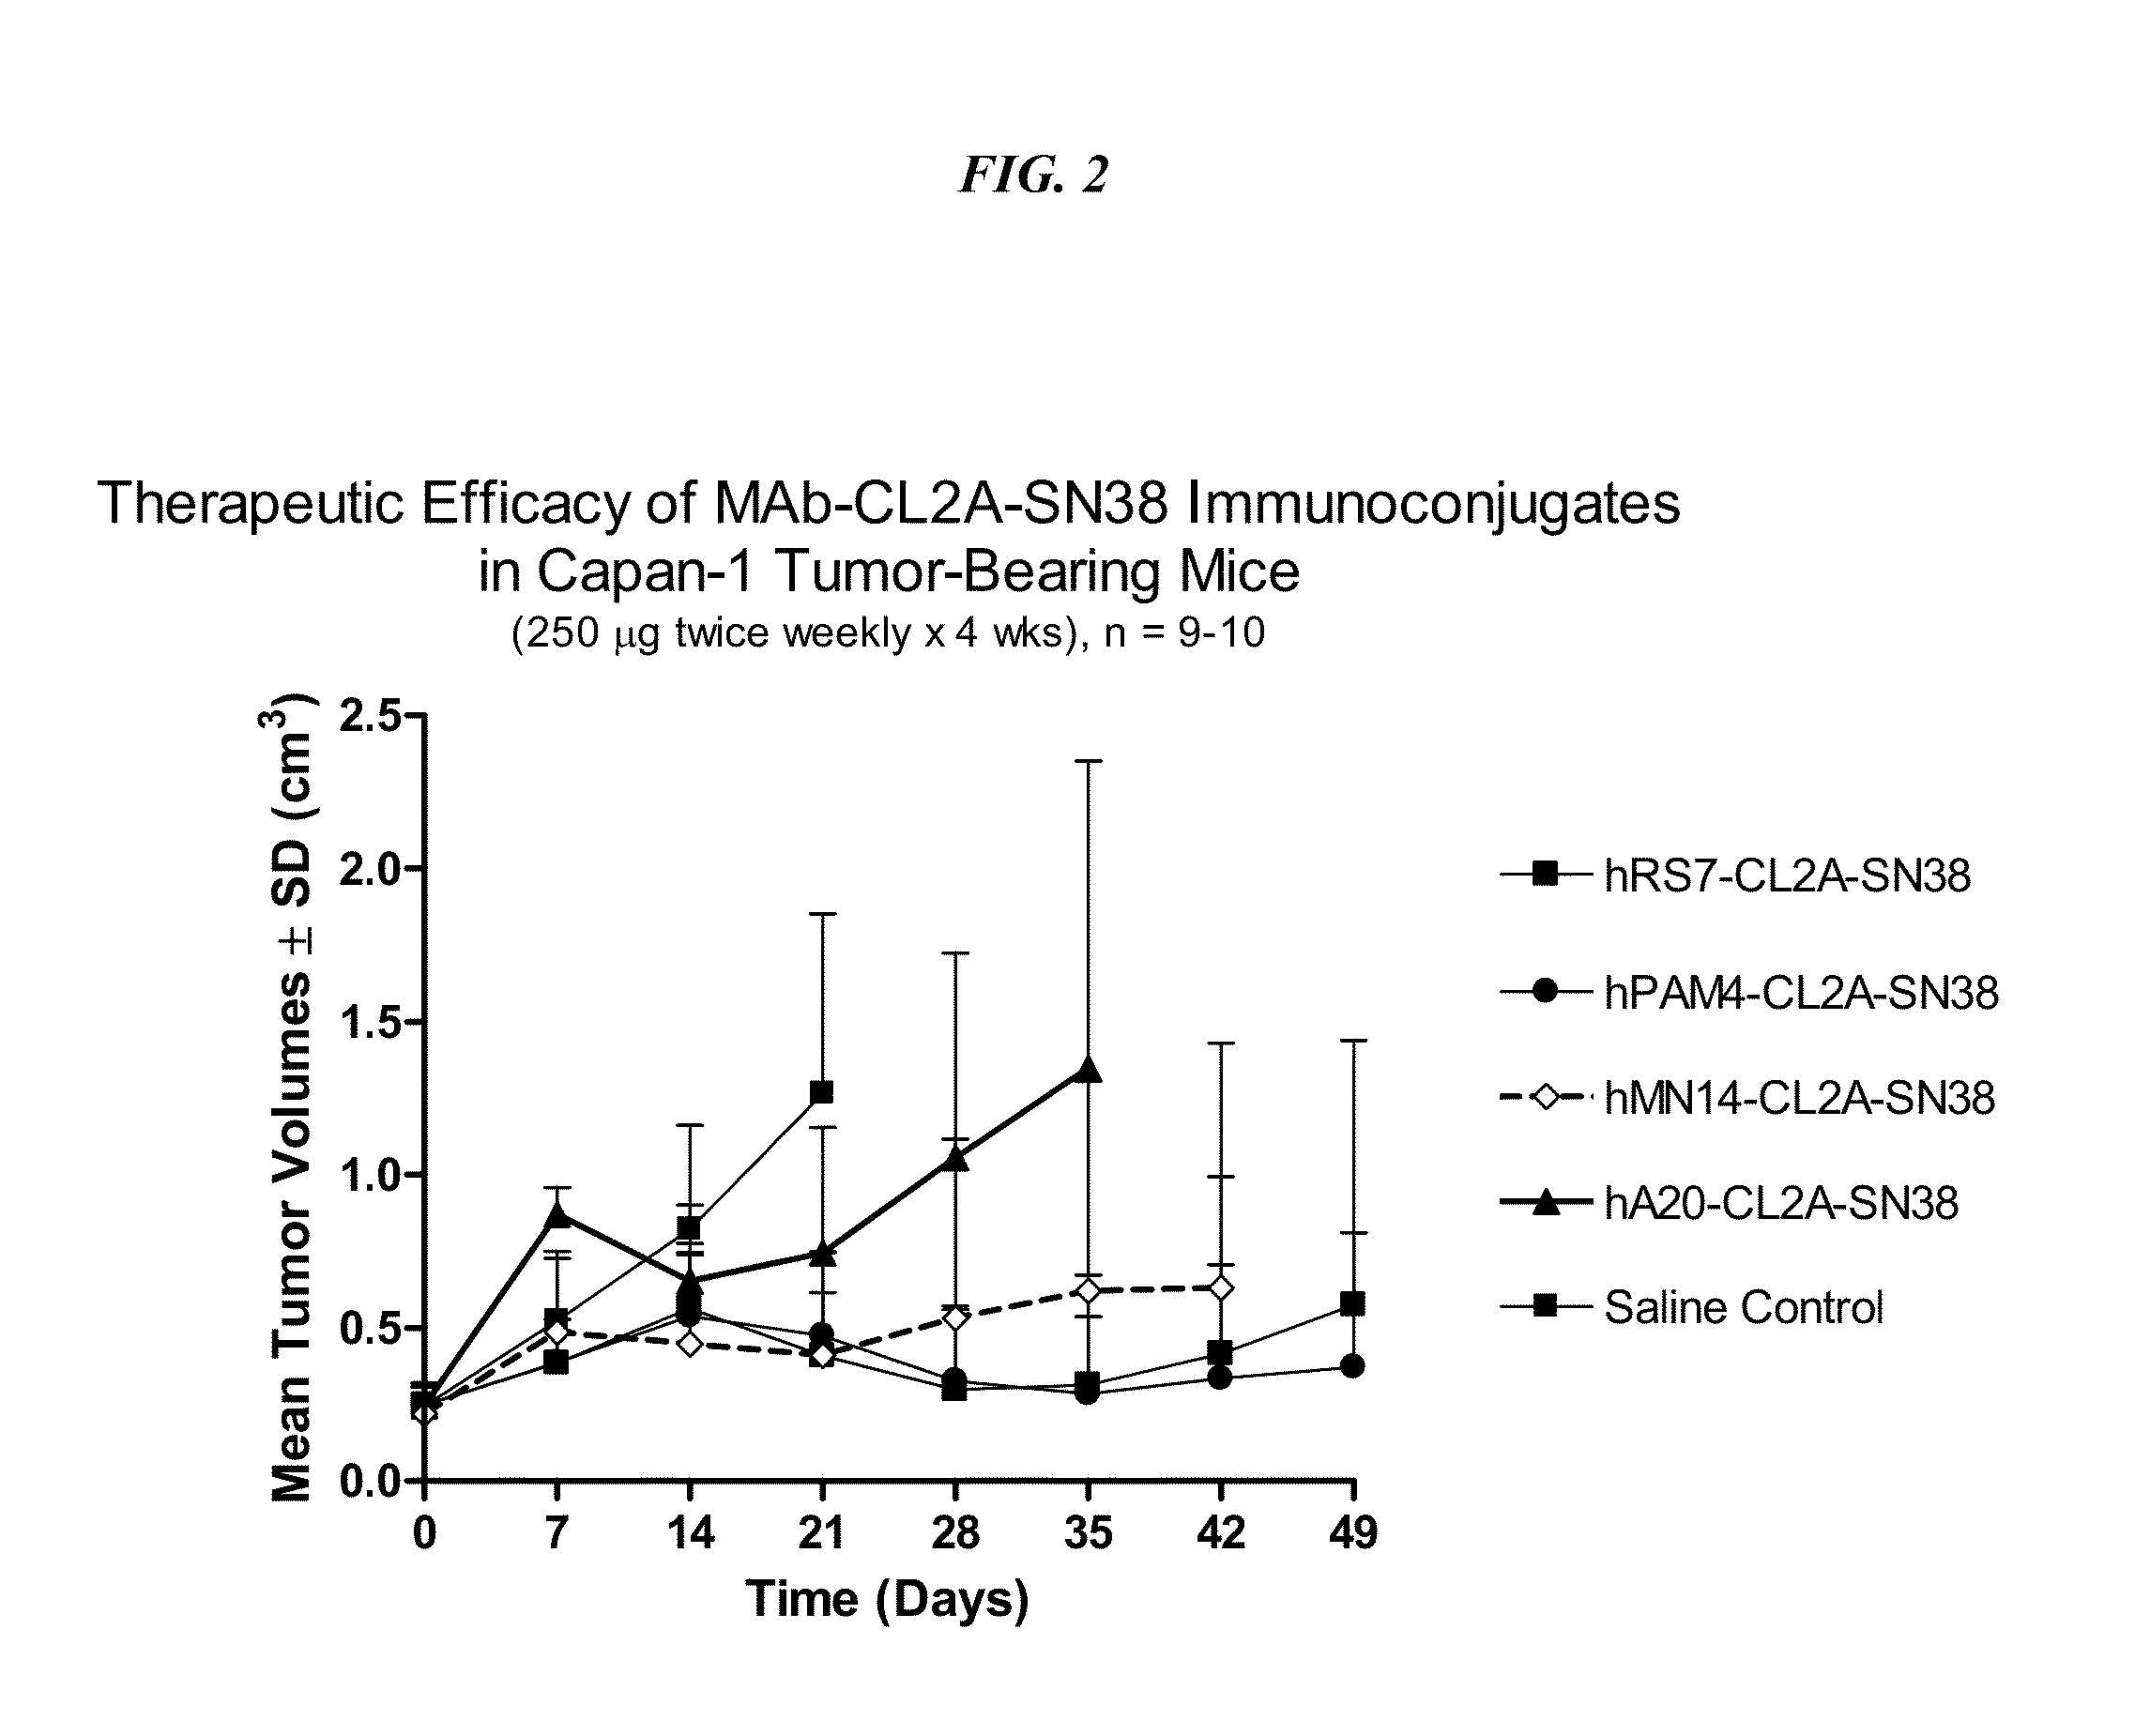 Antibody-sn-38 immunoconjugates with a cl2a linker